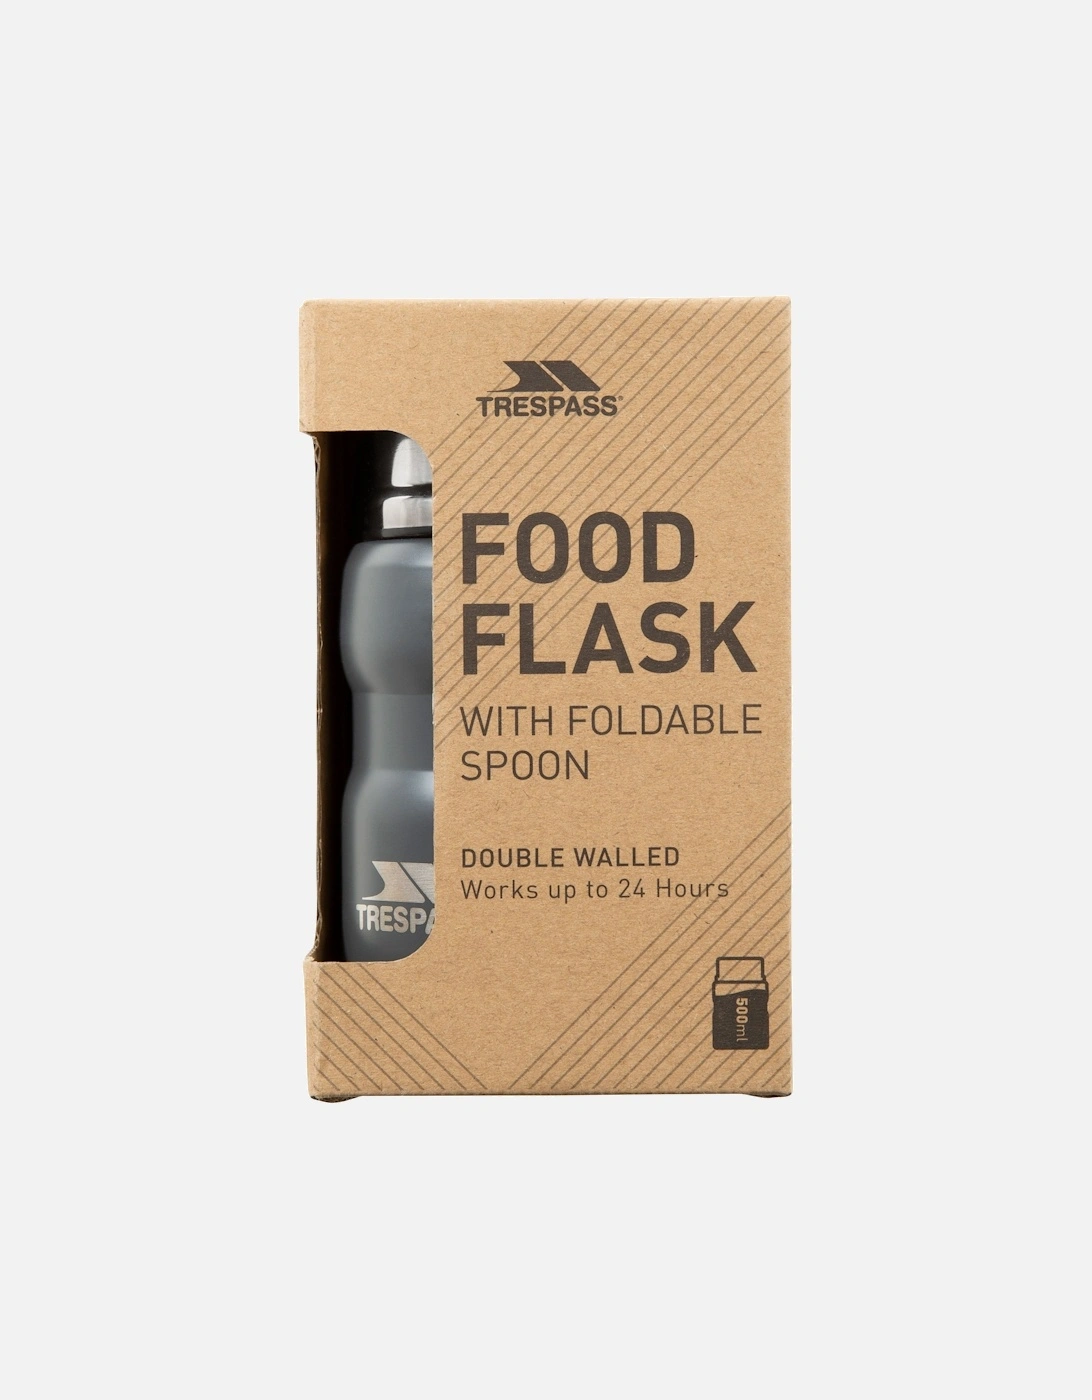 Scran Food Flask